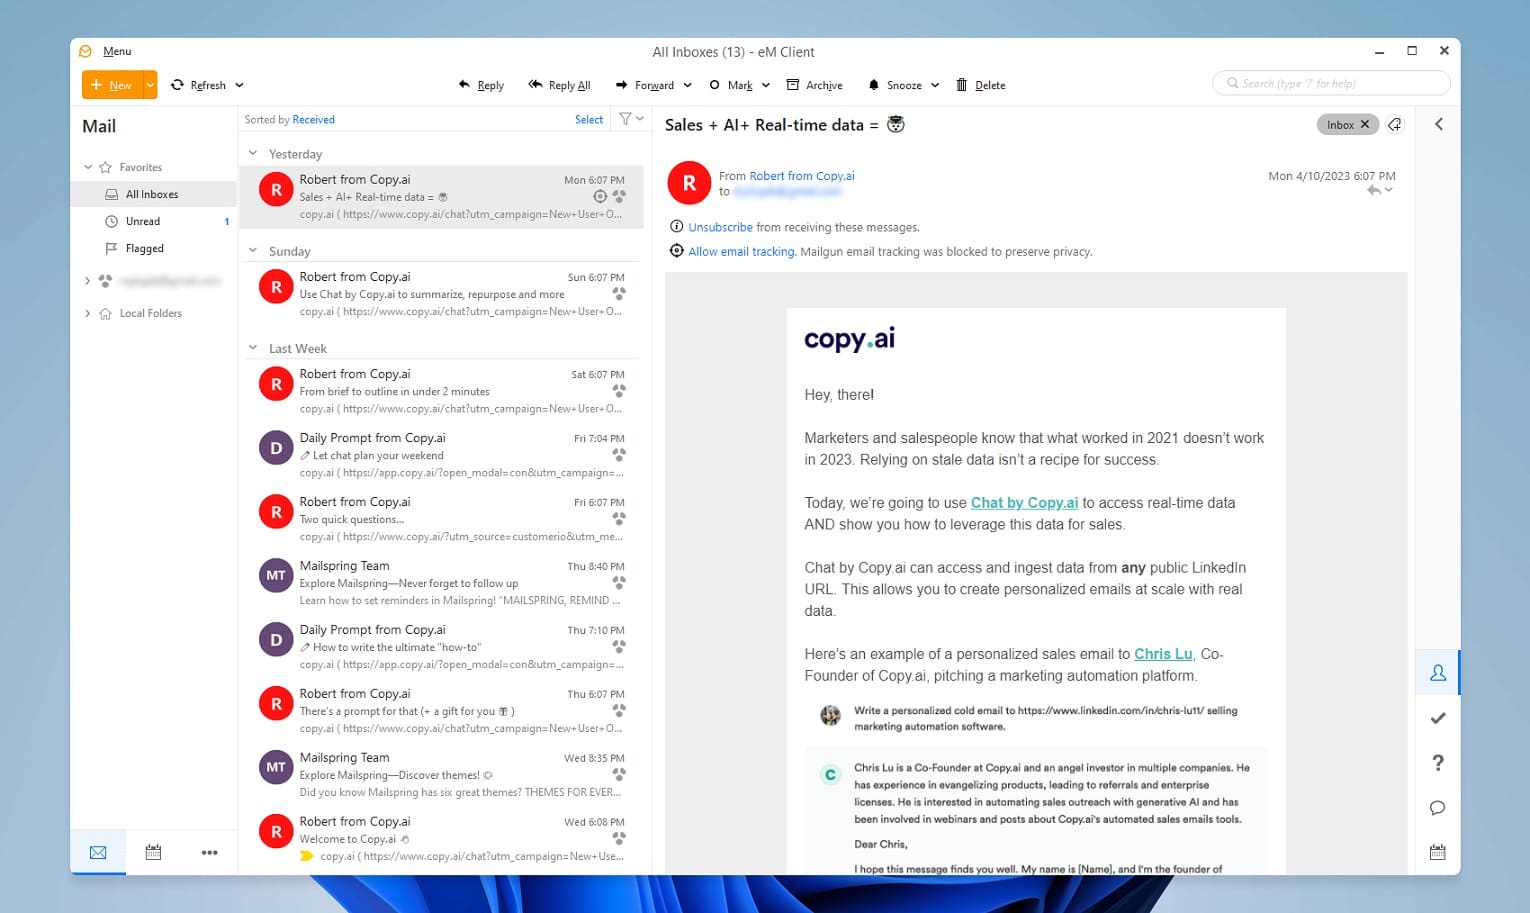 best email clients windows 10